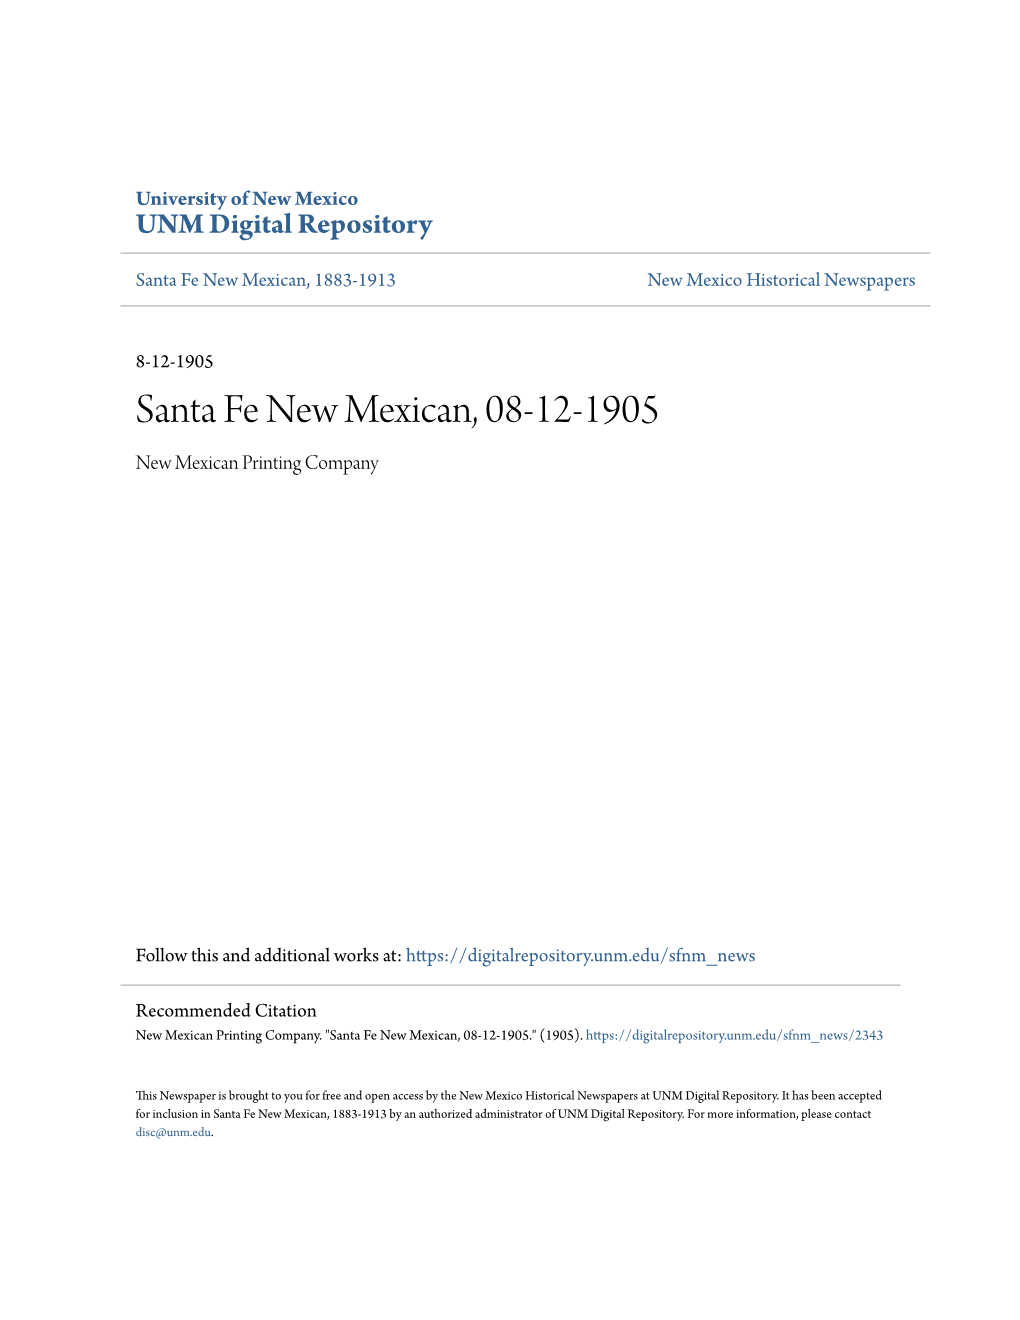 Santa Fe New Mexican, 08-12-1905 New Mexican Printing Company